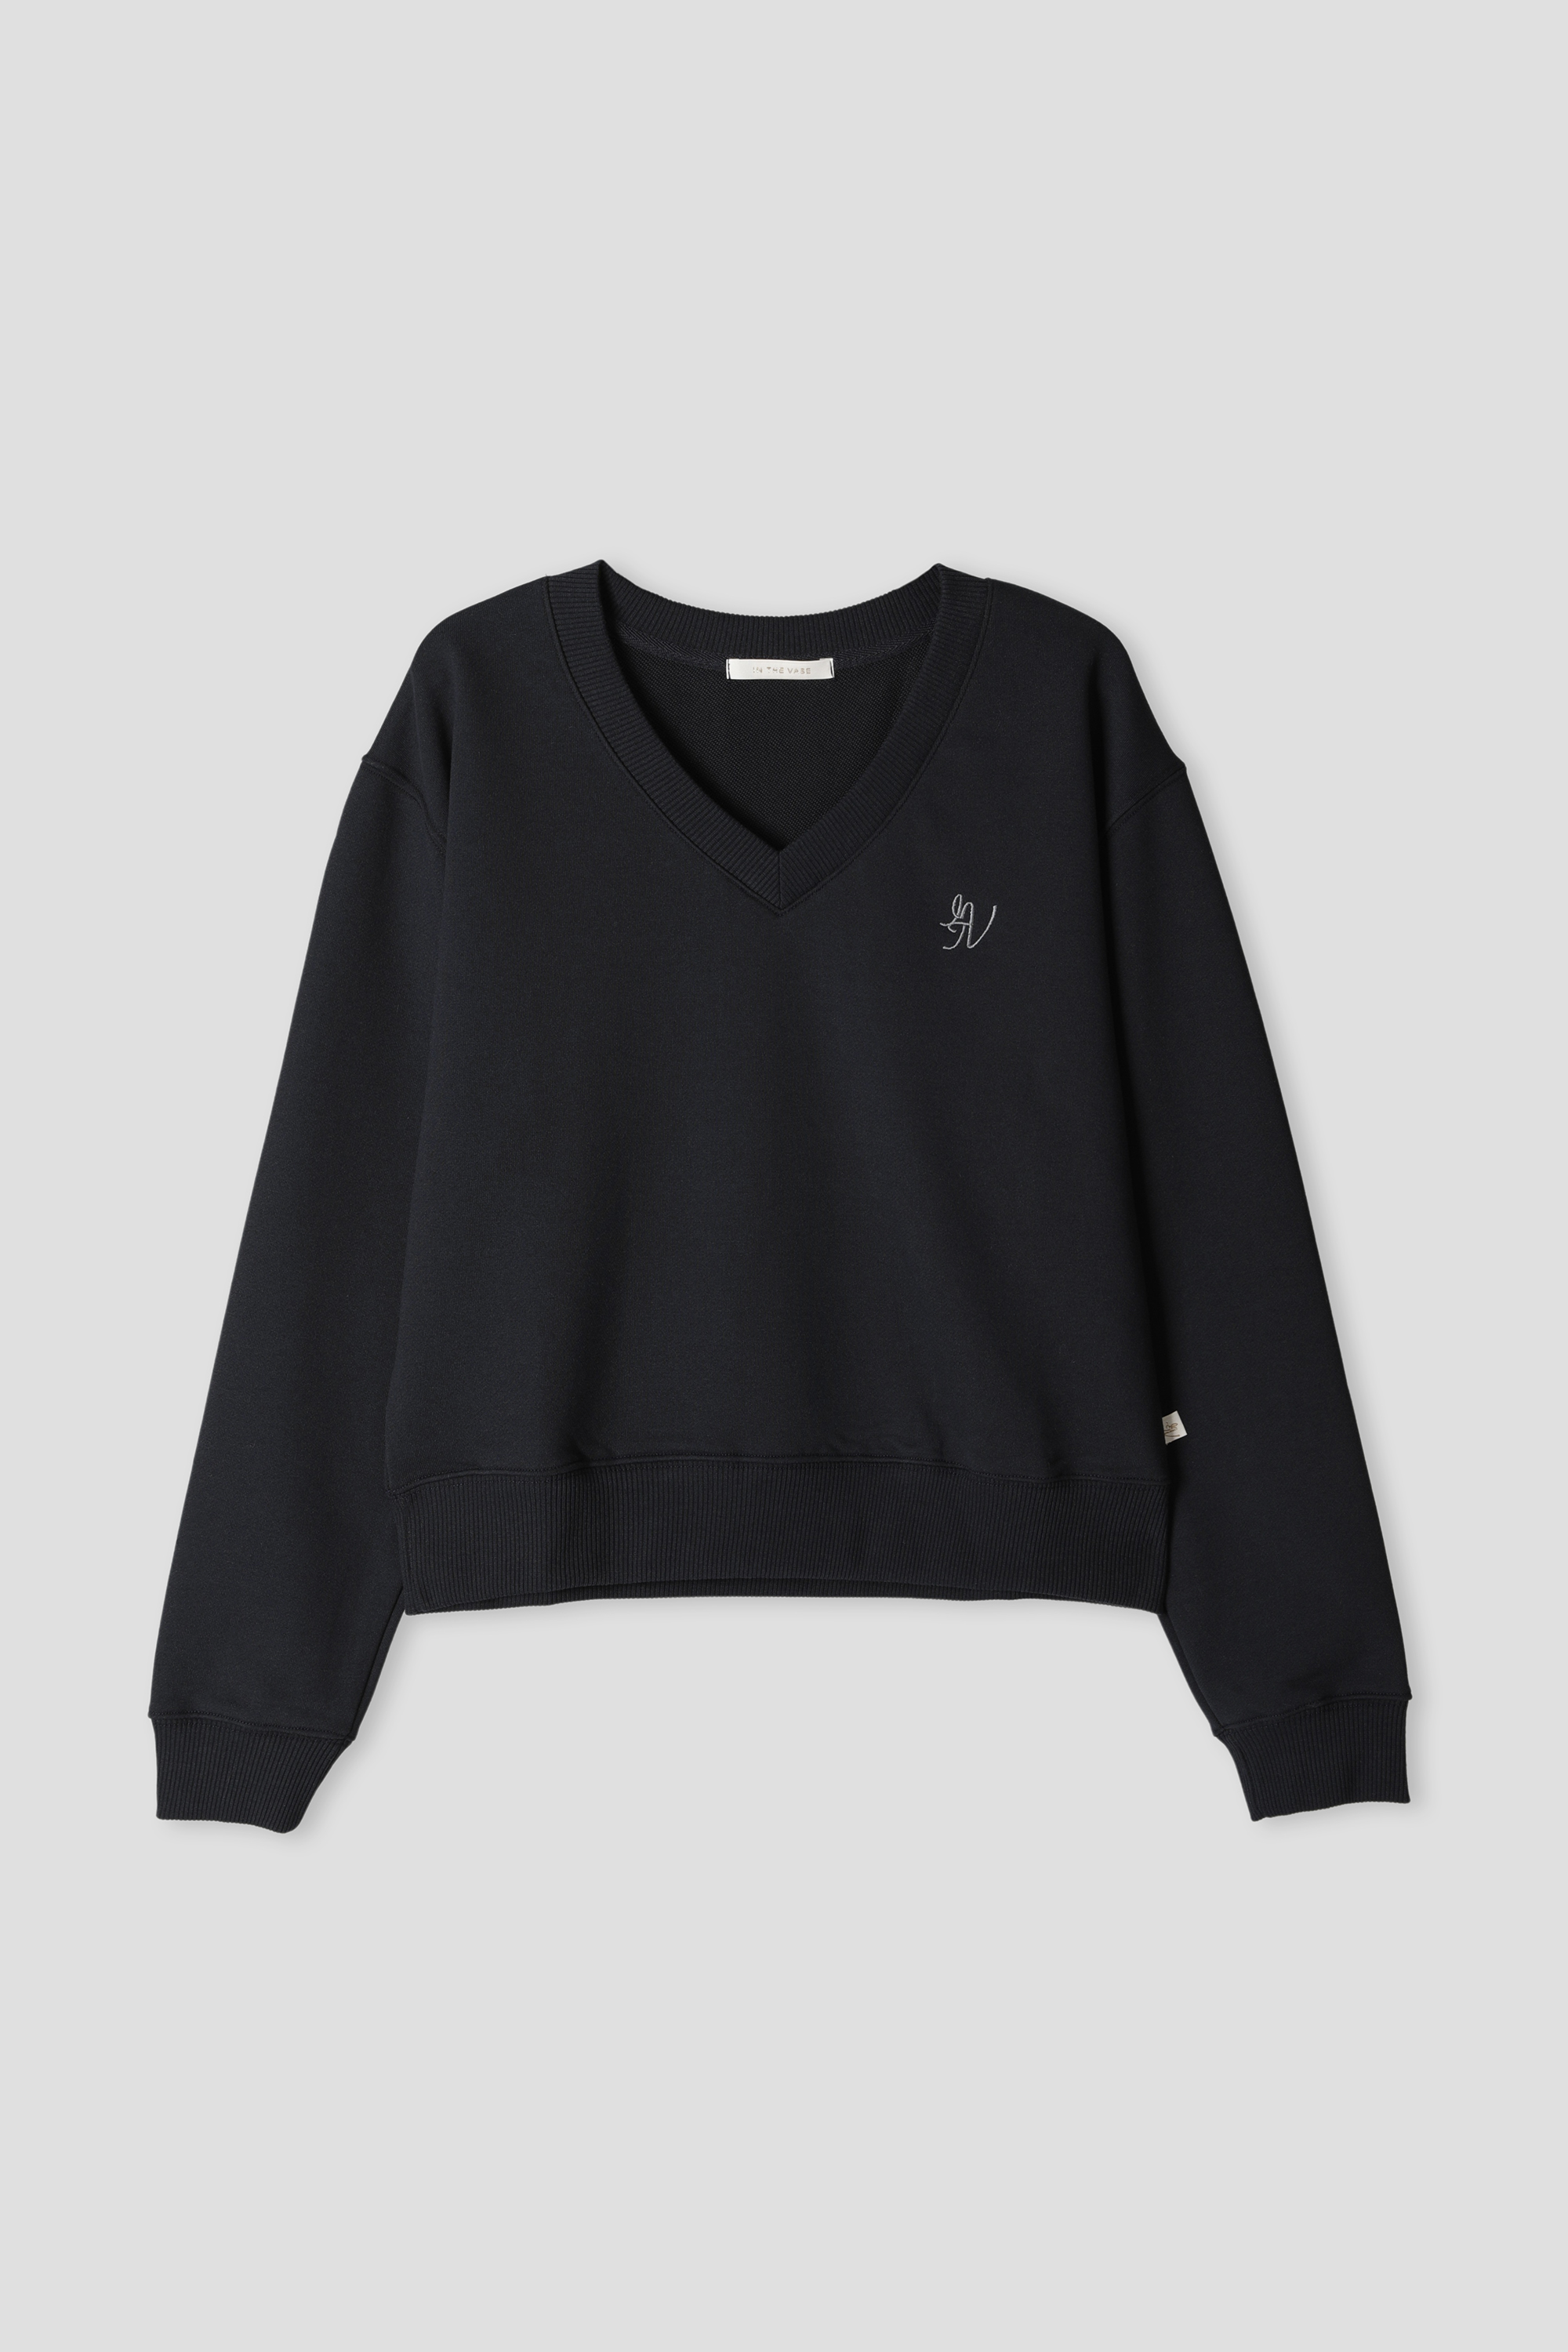 [ITV] Cotton simple sweatshirt [2colors]